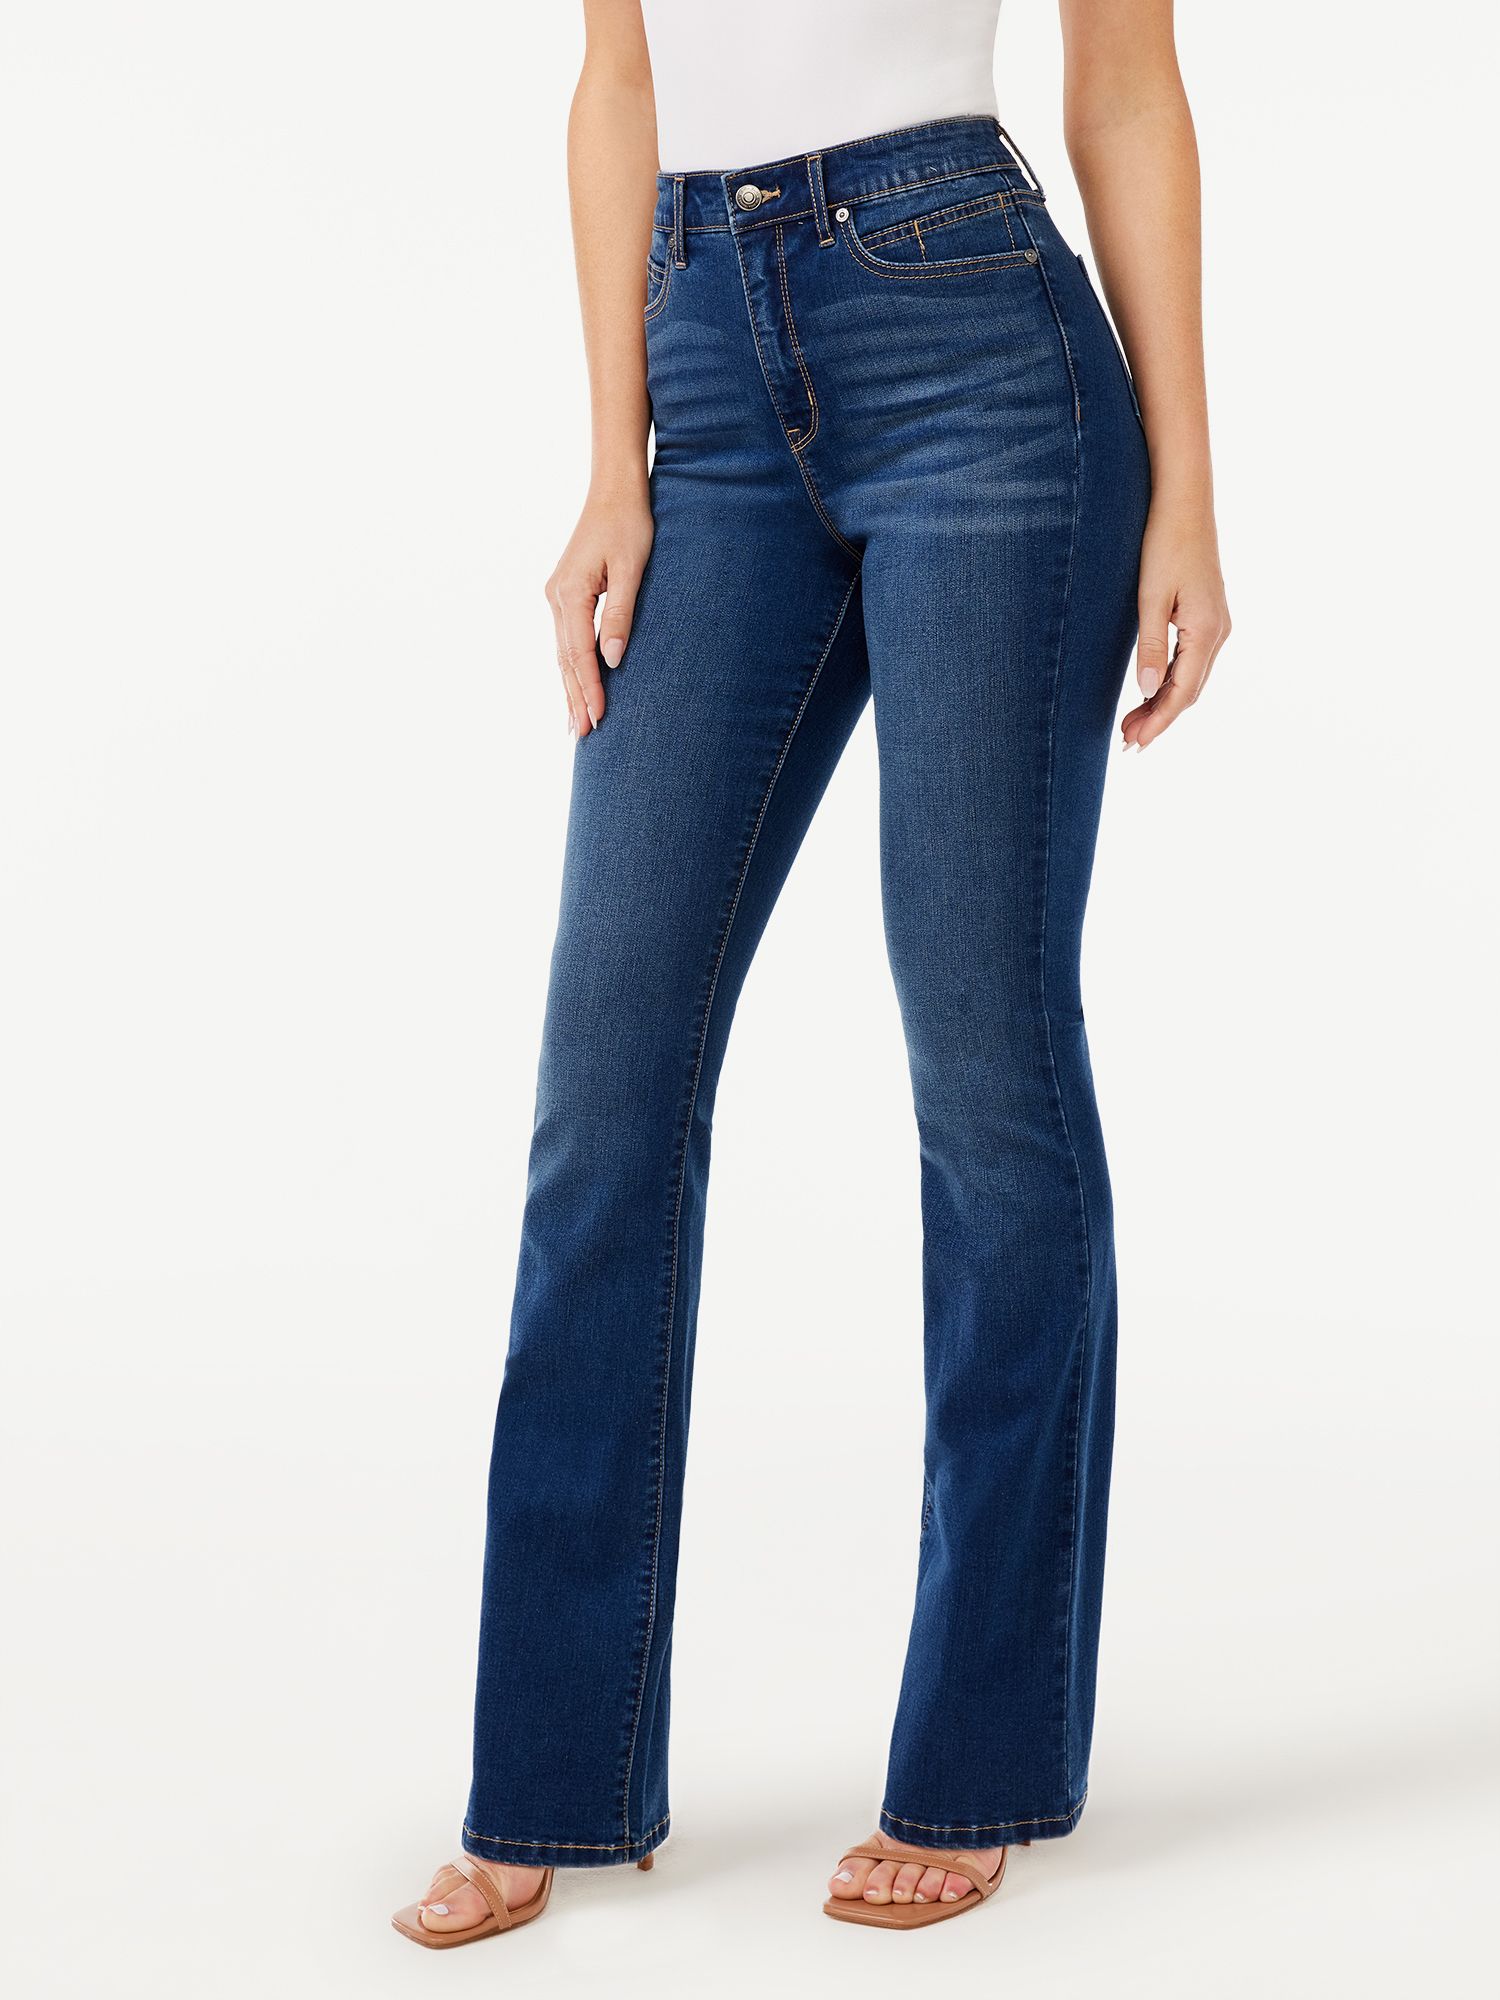 Sofia Jeans by Sofia Vergara Women's Marisol Super High Rise Curvy Boot Cut Jeans | Walmart (US)